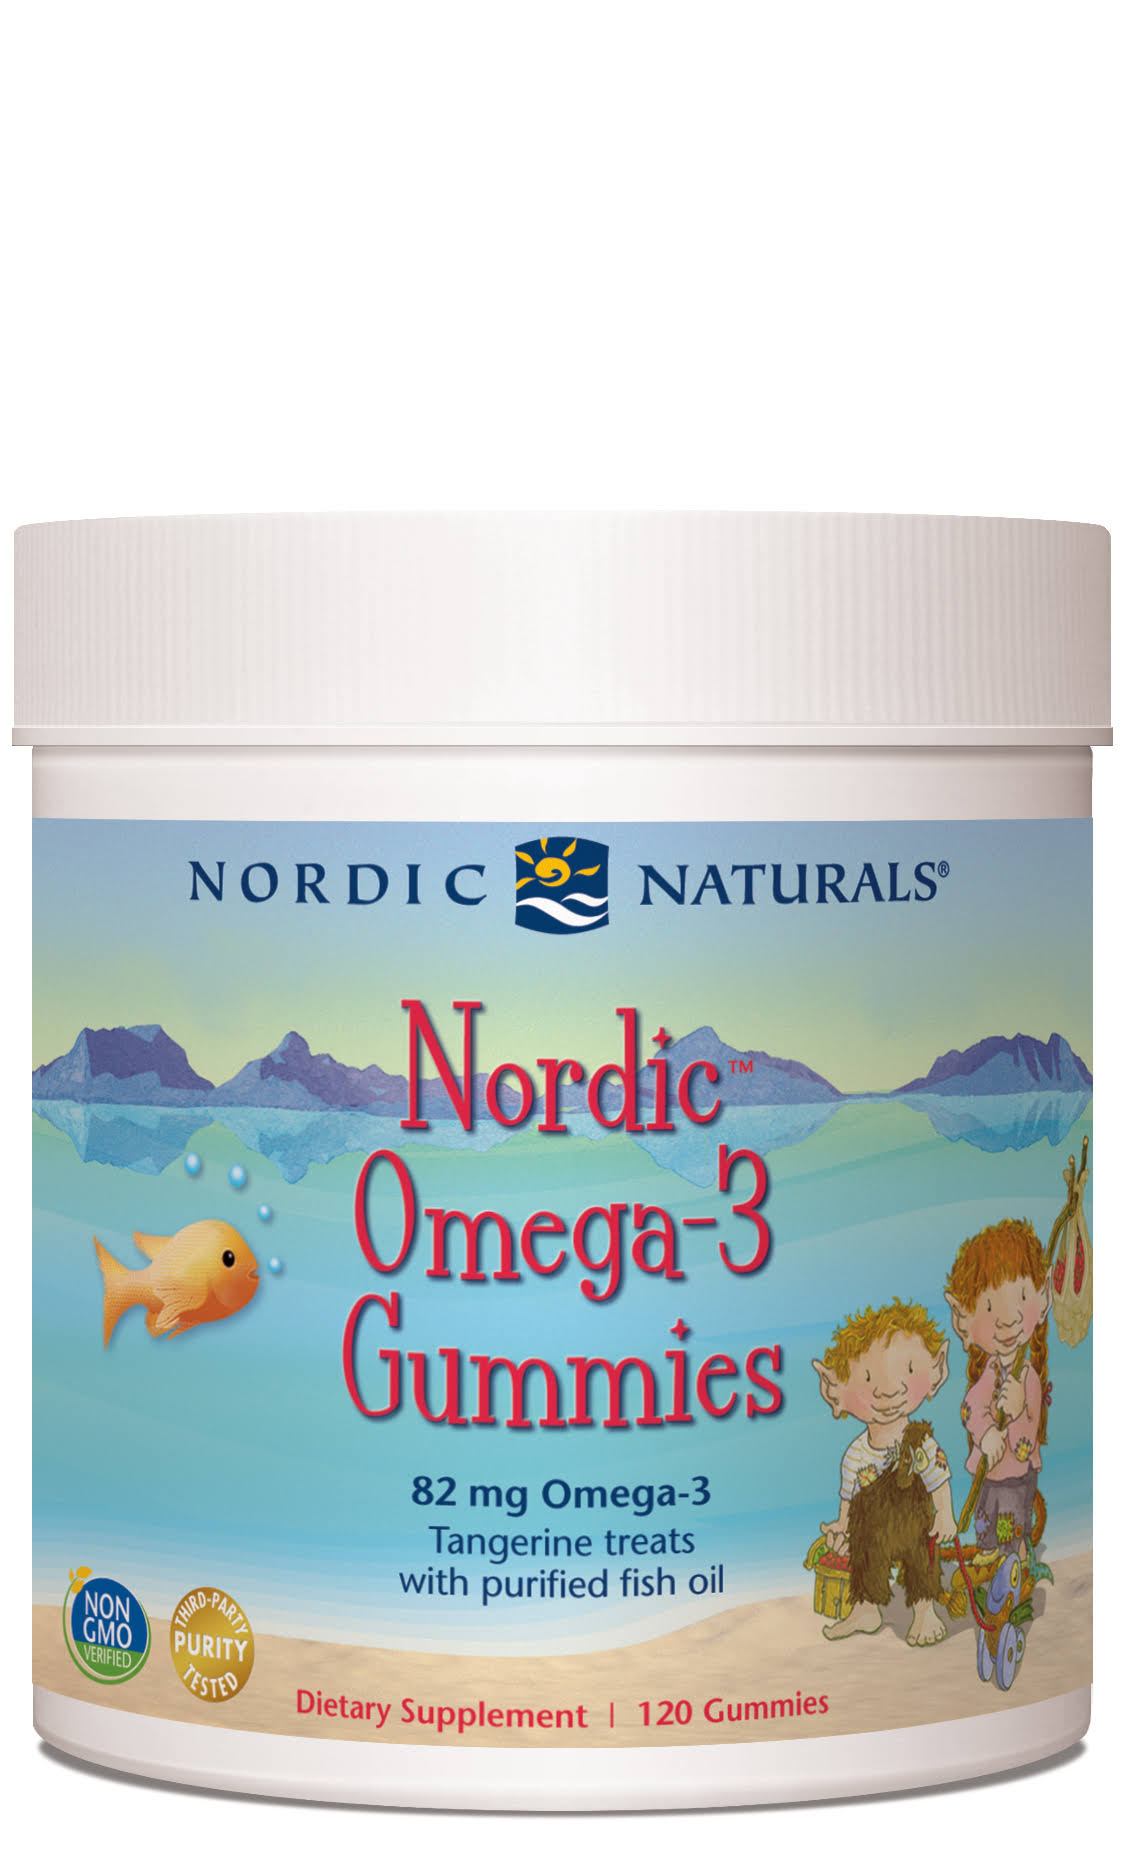 Nordic Naturals Nordic Omega-3 Gummies Dietary Supplement - 82mg, 120 Gummies